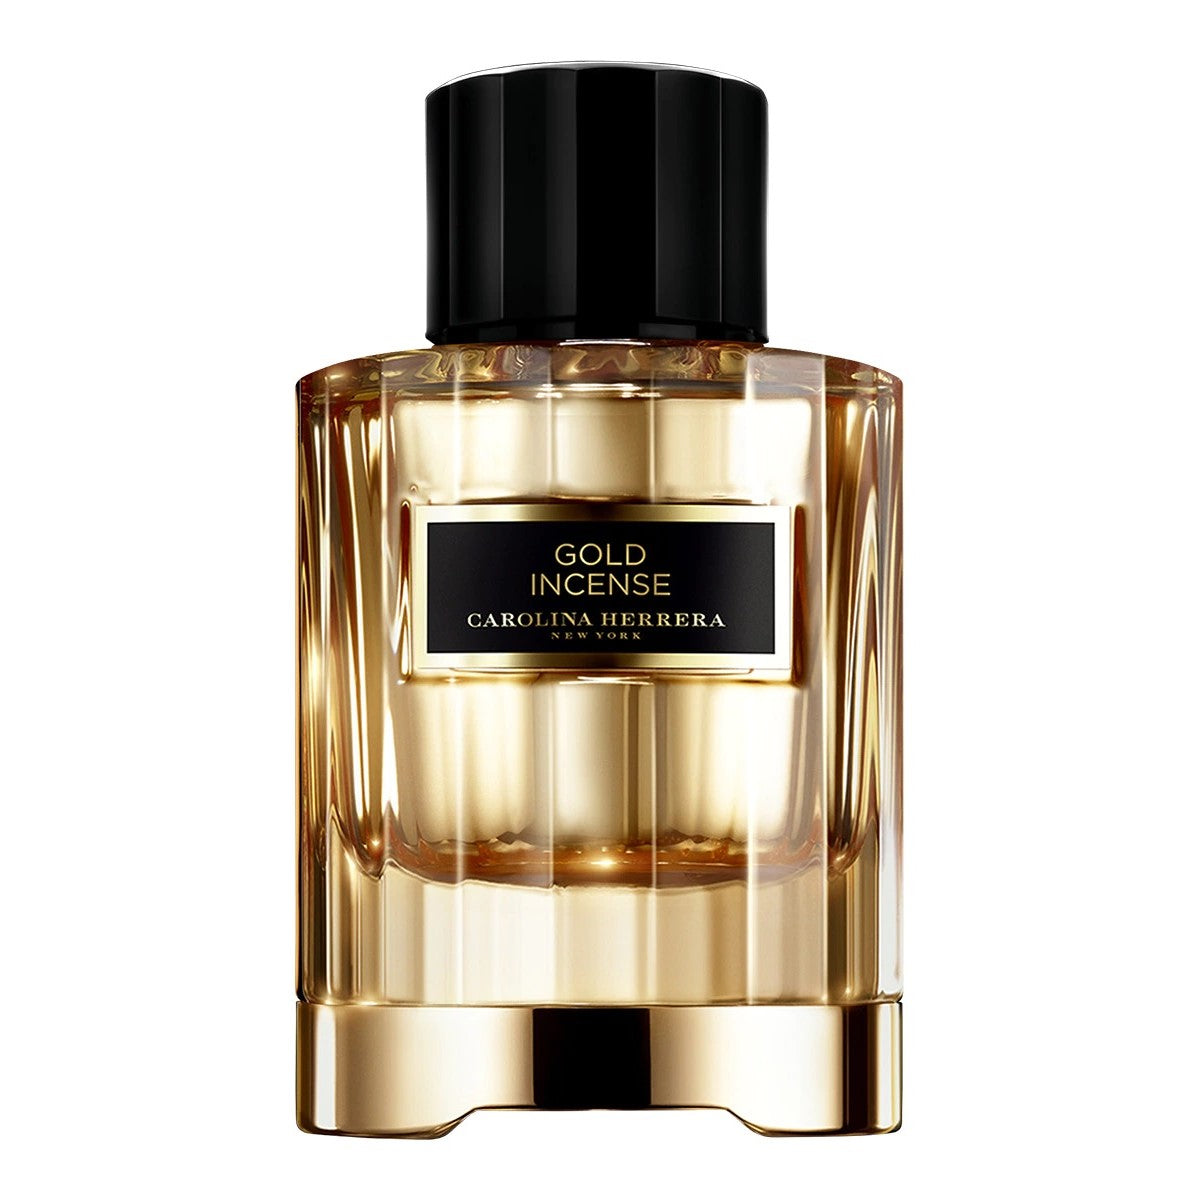 Carolina Herrera Confidential Gold Incense Eau De Parfum